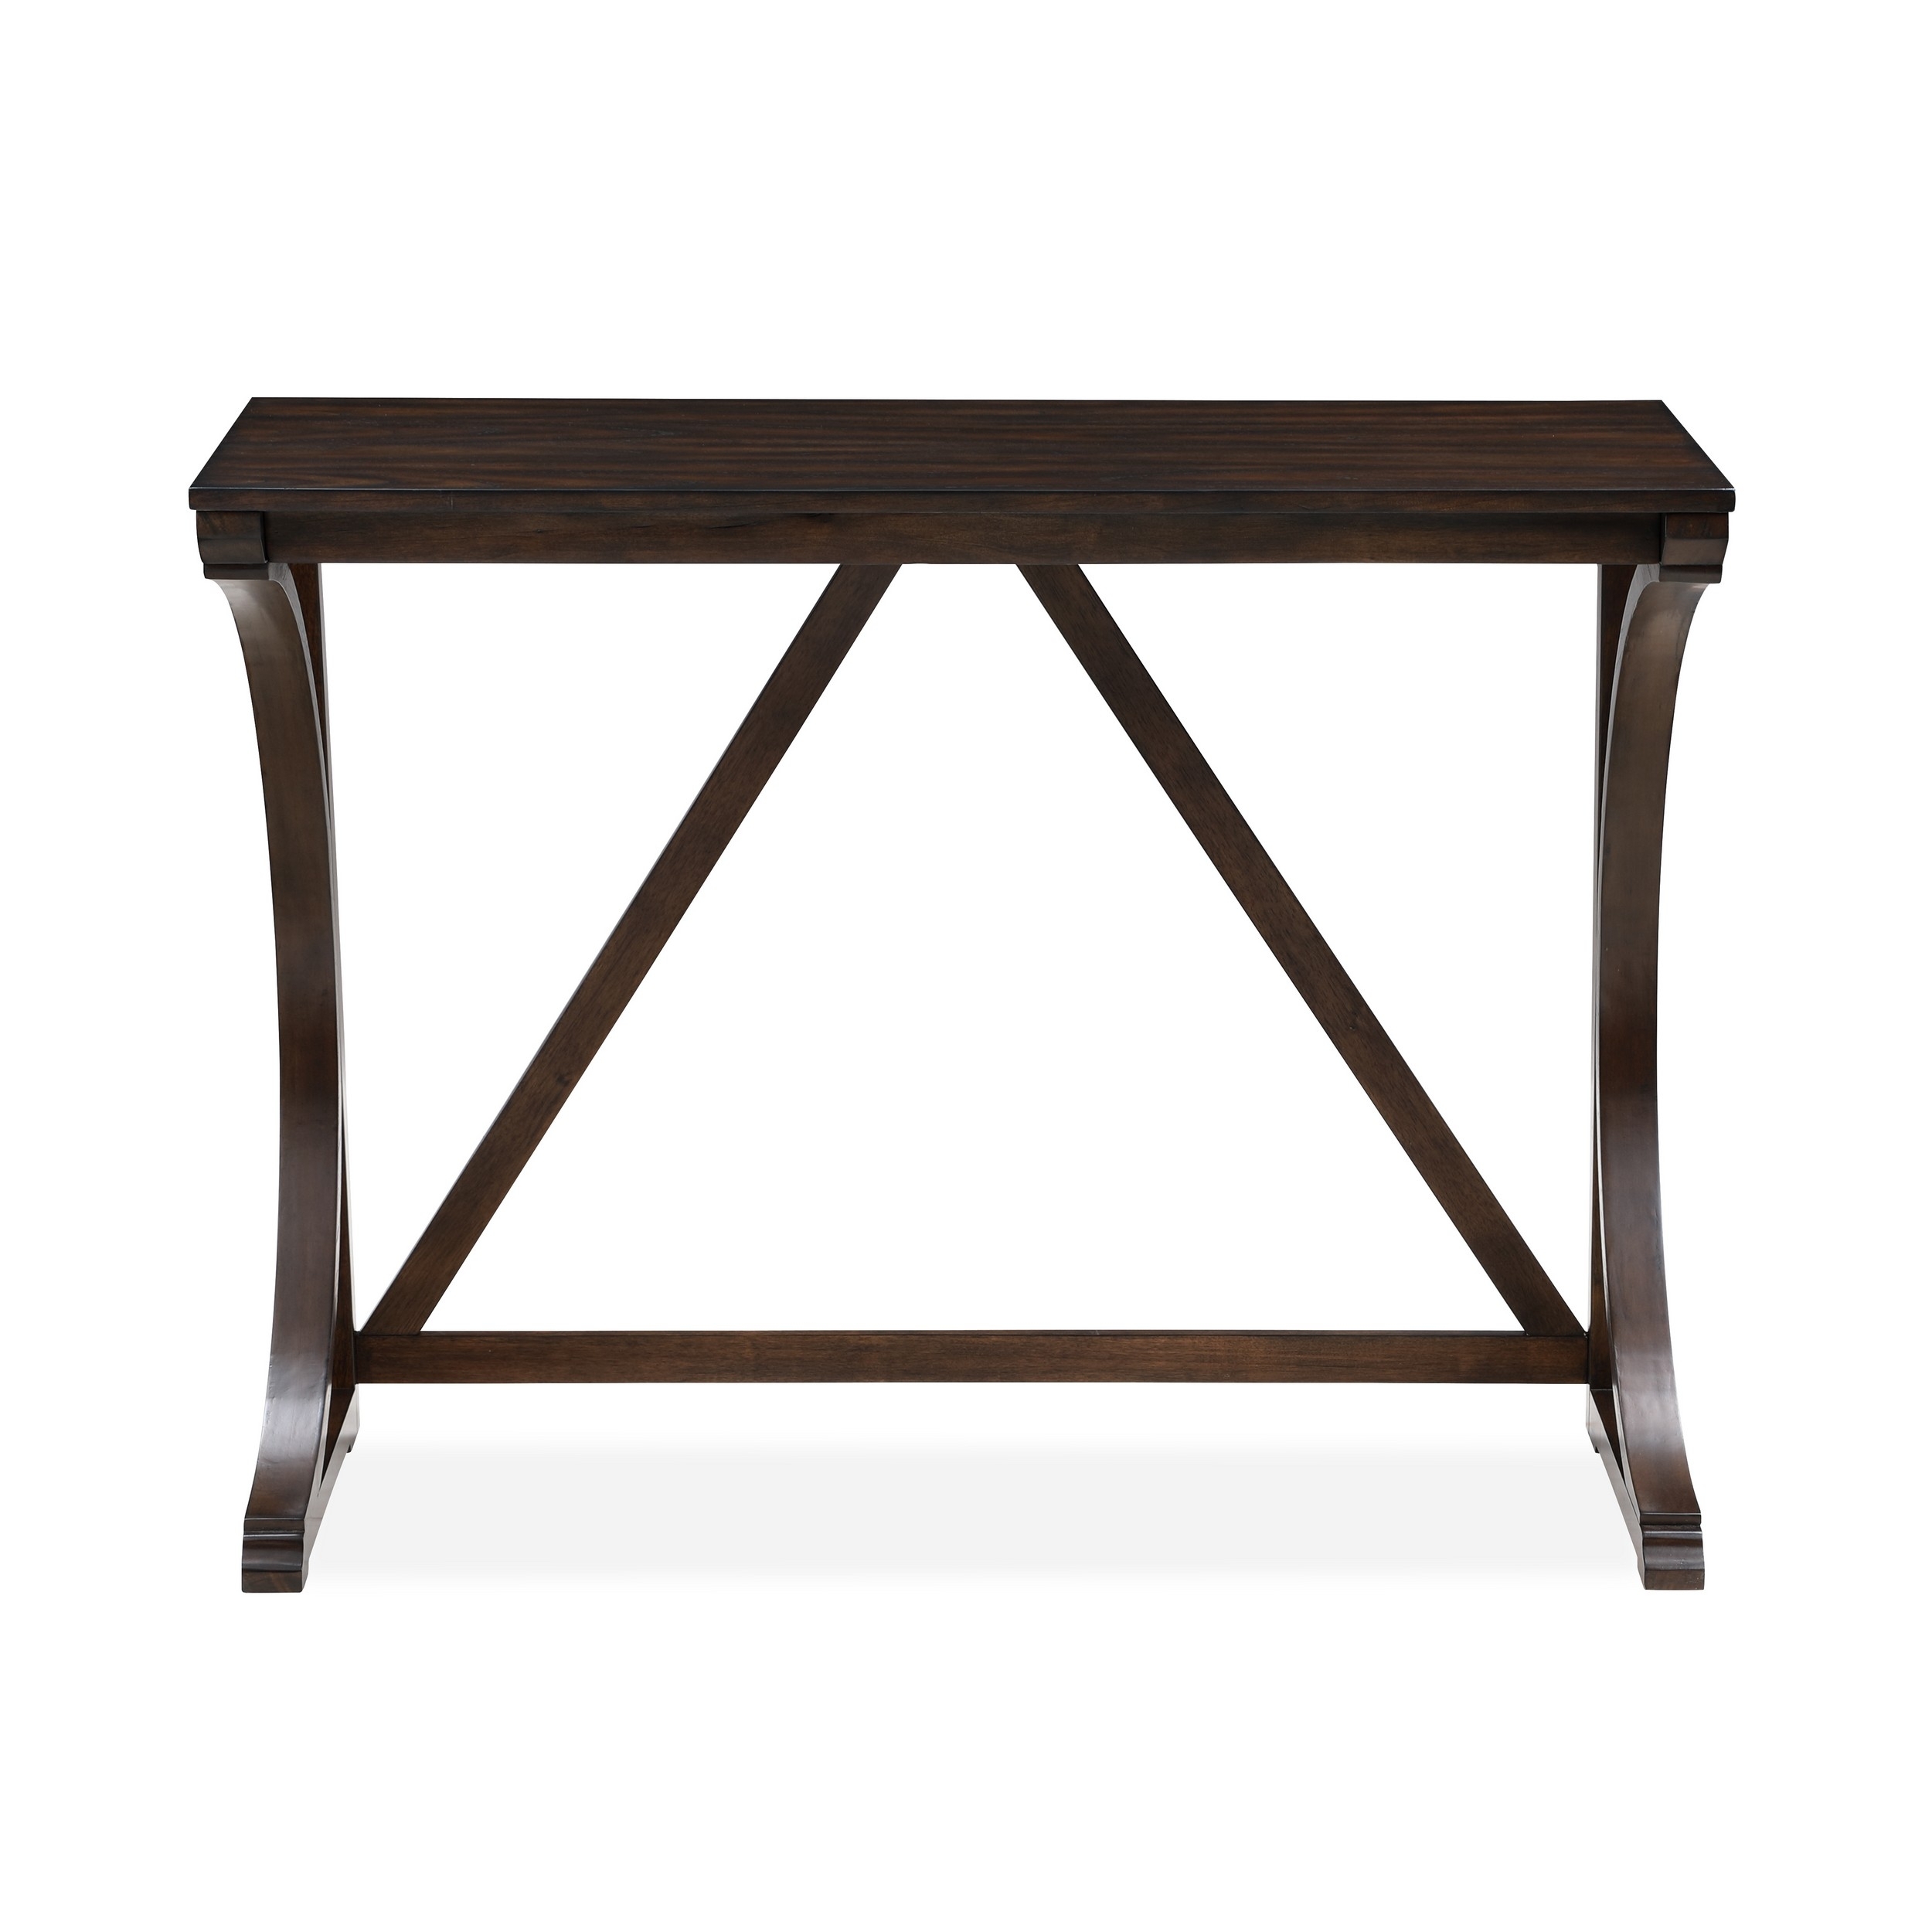 Ruth 3 Piece Brown Counter Table Set, Fabric Seating, Open Geometric Design- Saltoro Sherpi